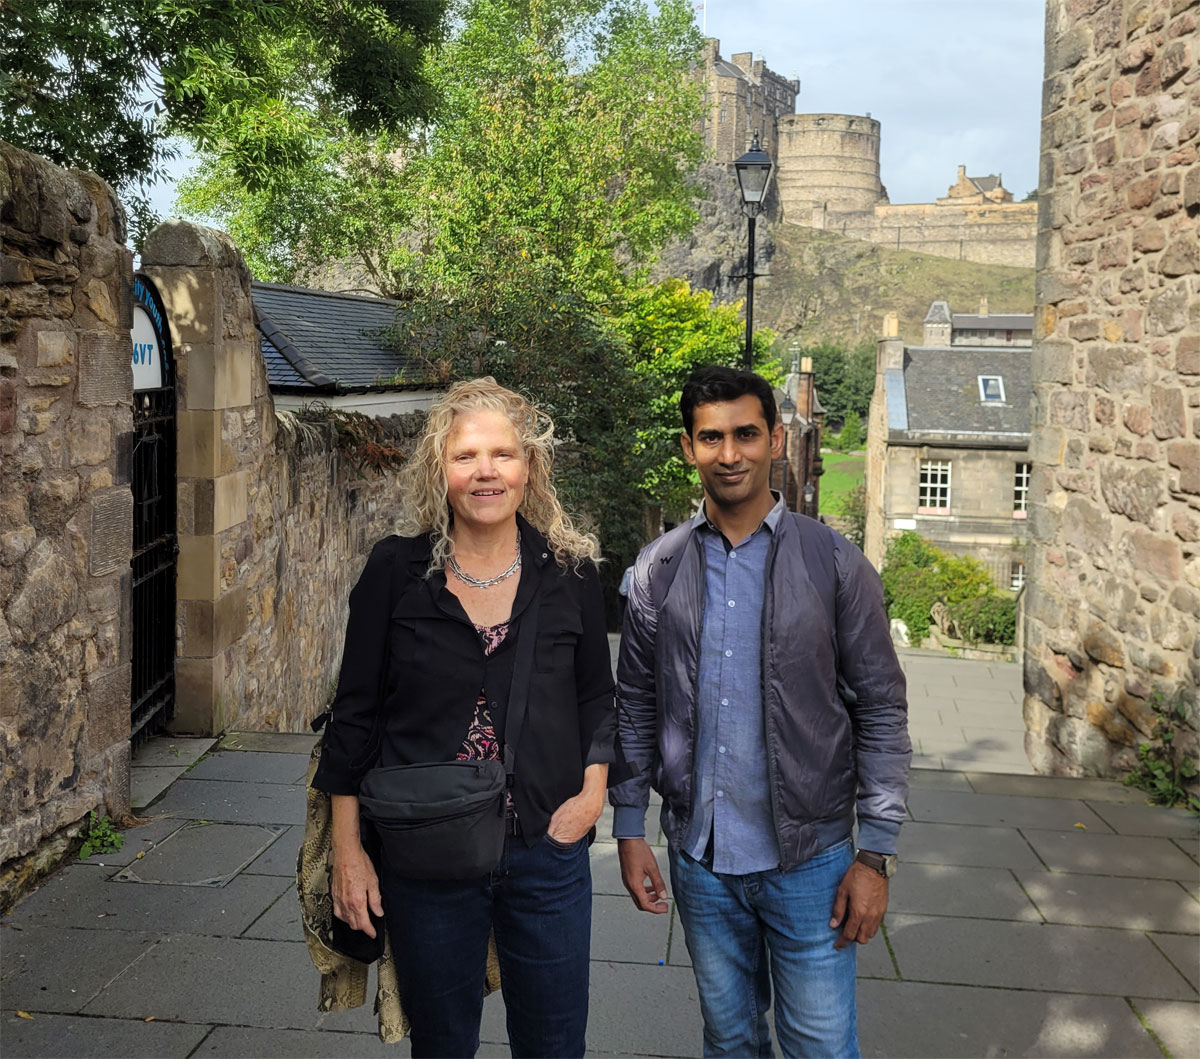 Michele and Farrukh at Grassmarket, Edinburgh castle in the background